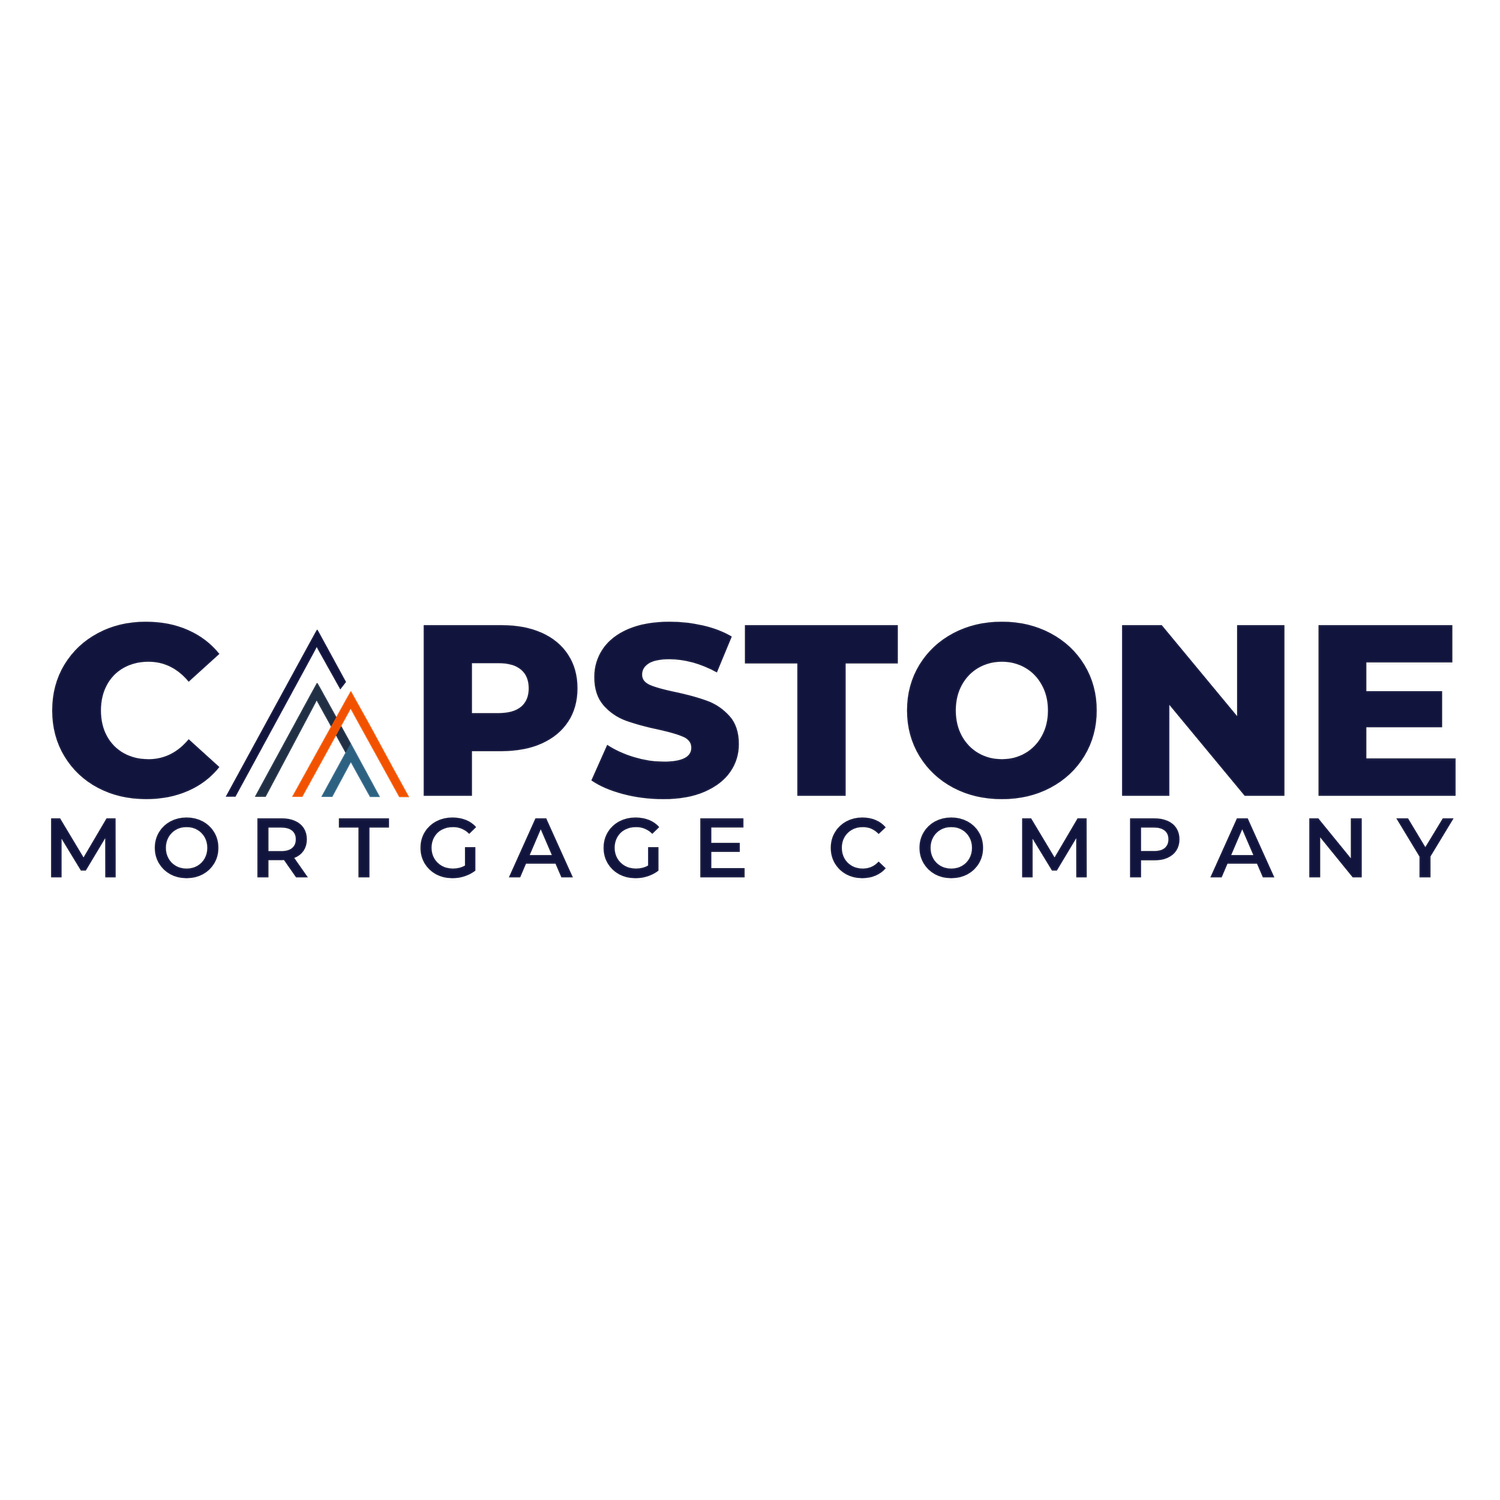 Capstone Mortgage Company